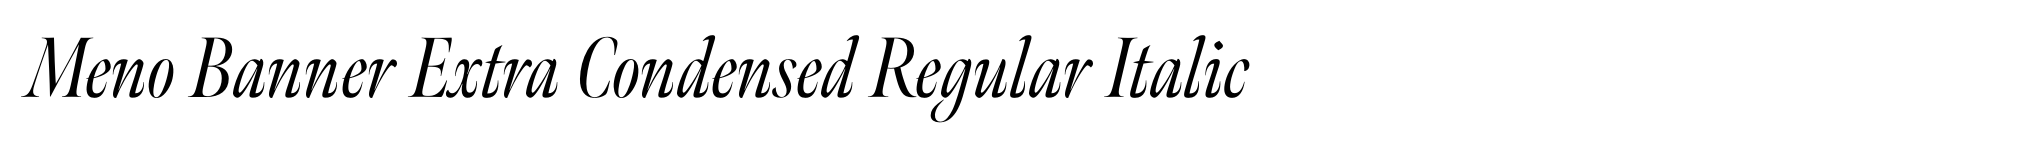 Meno Banner Extra Condensed Regular Italic image